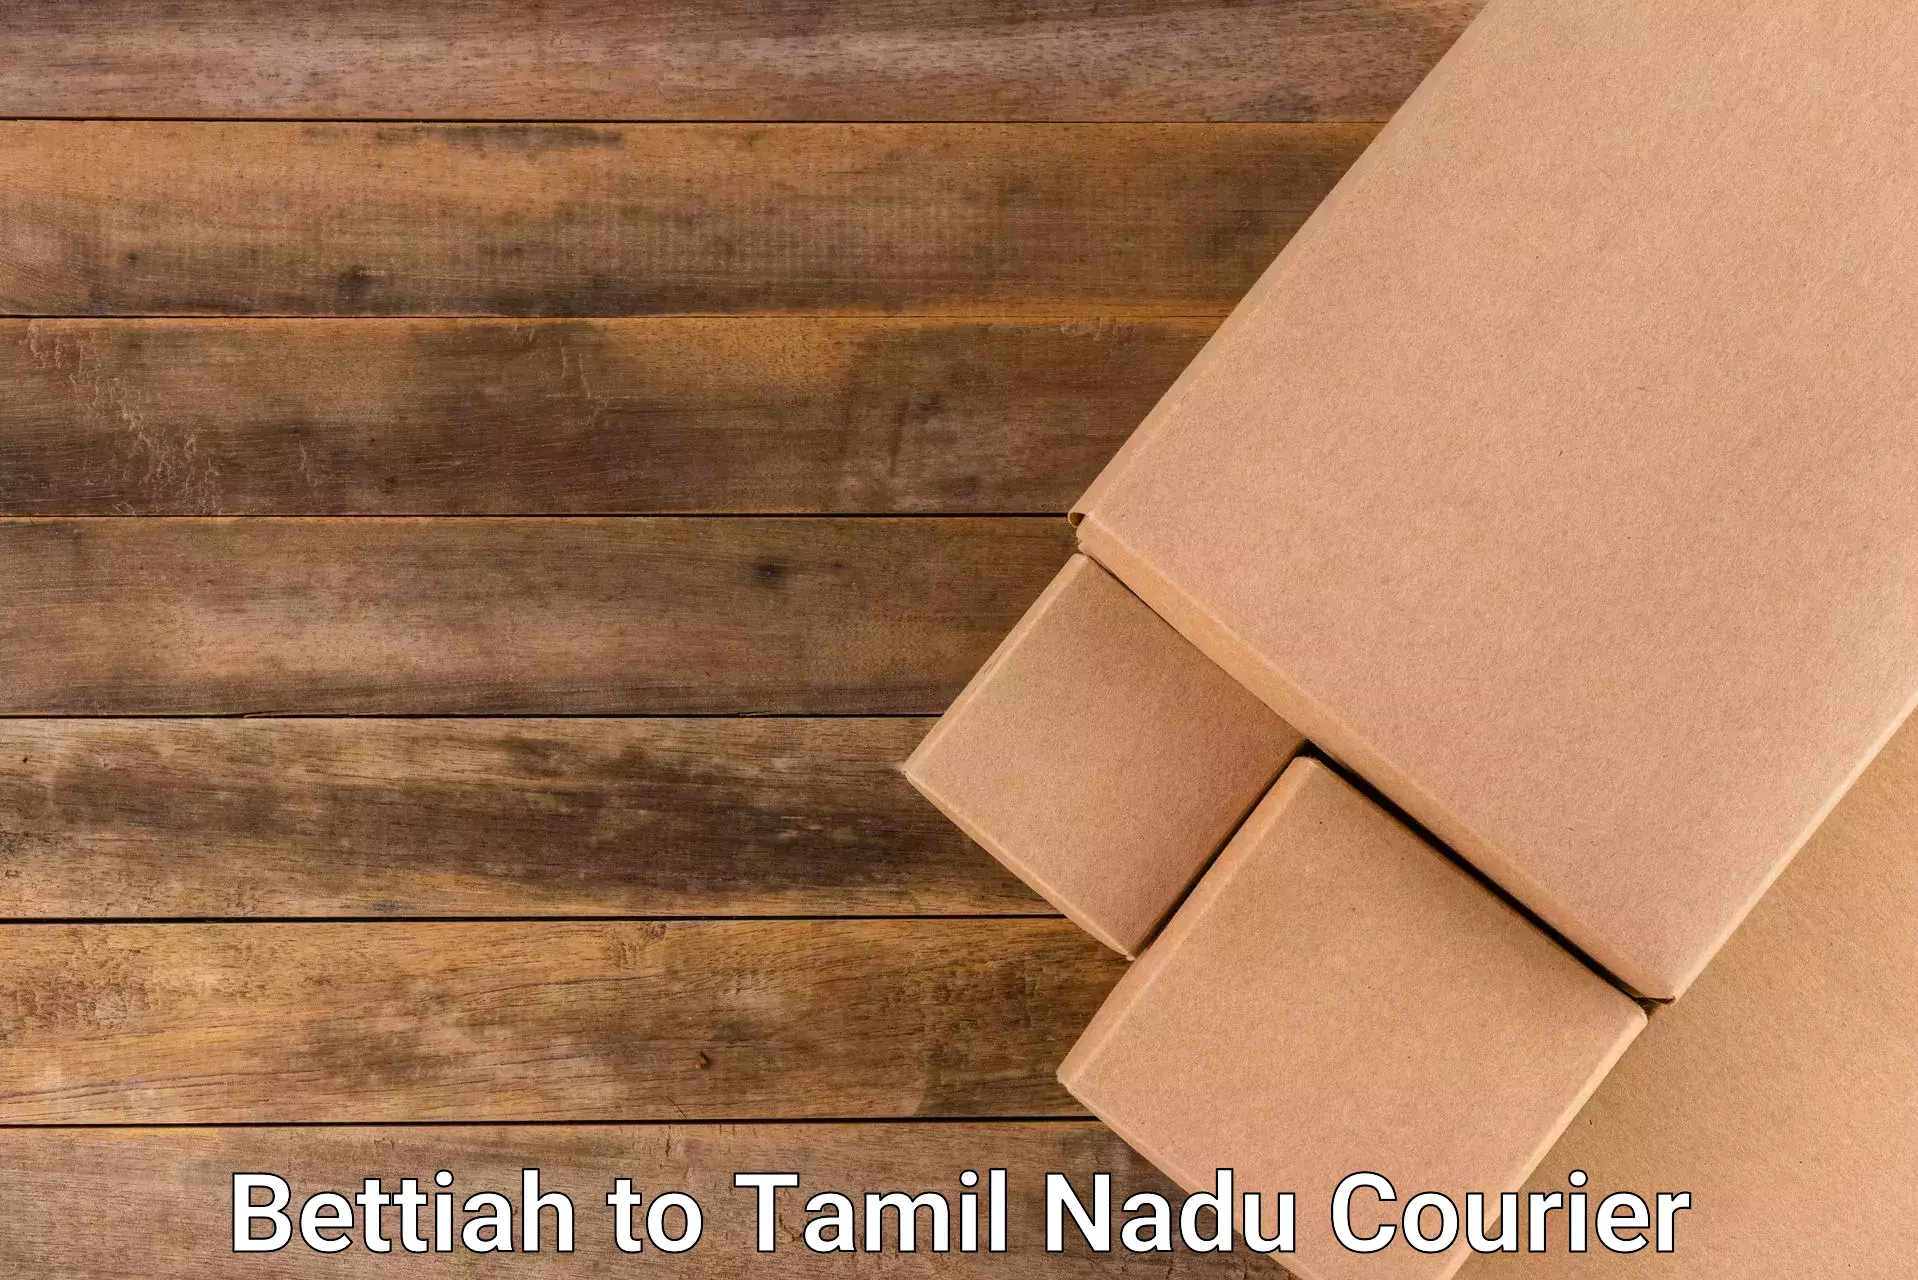 Shipping and handling Bettiah to Tamil Nadu